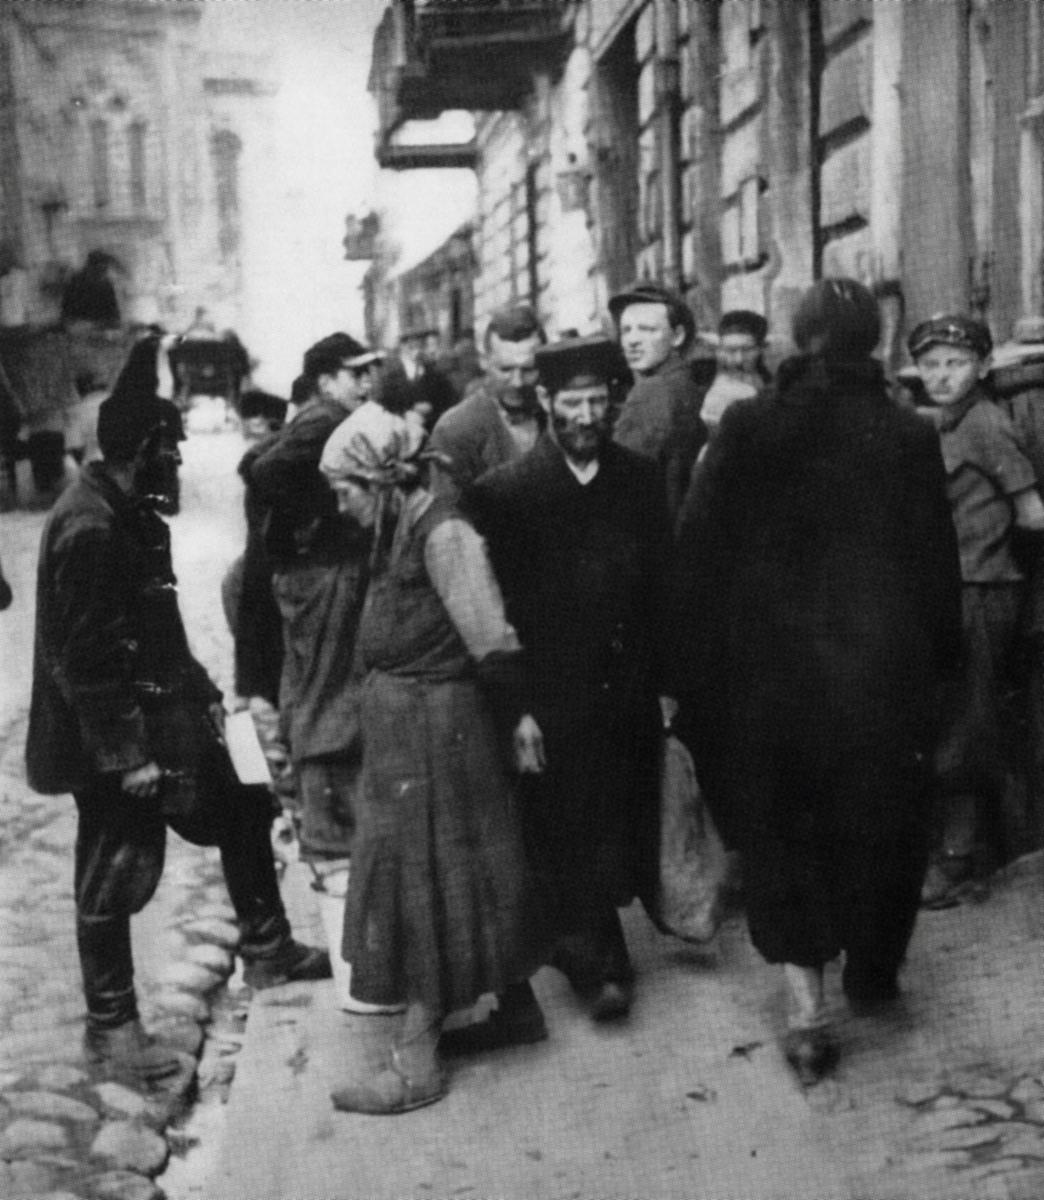 Street scene in Piotrków Trybunalski before the Holocaust